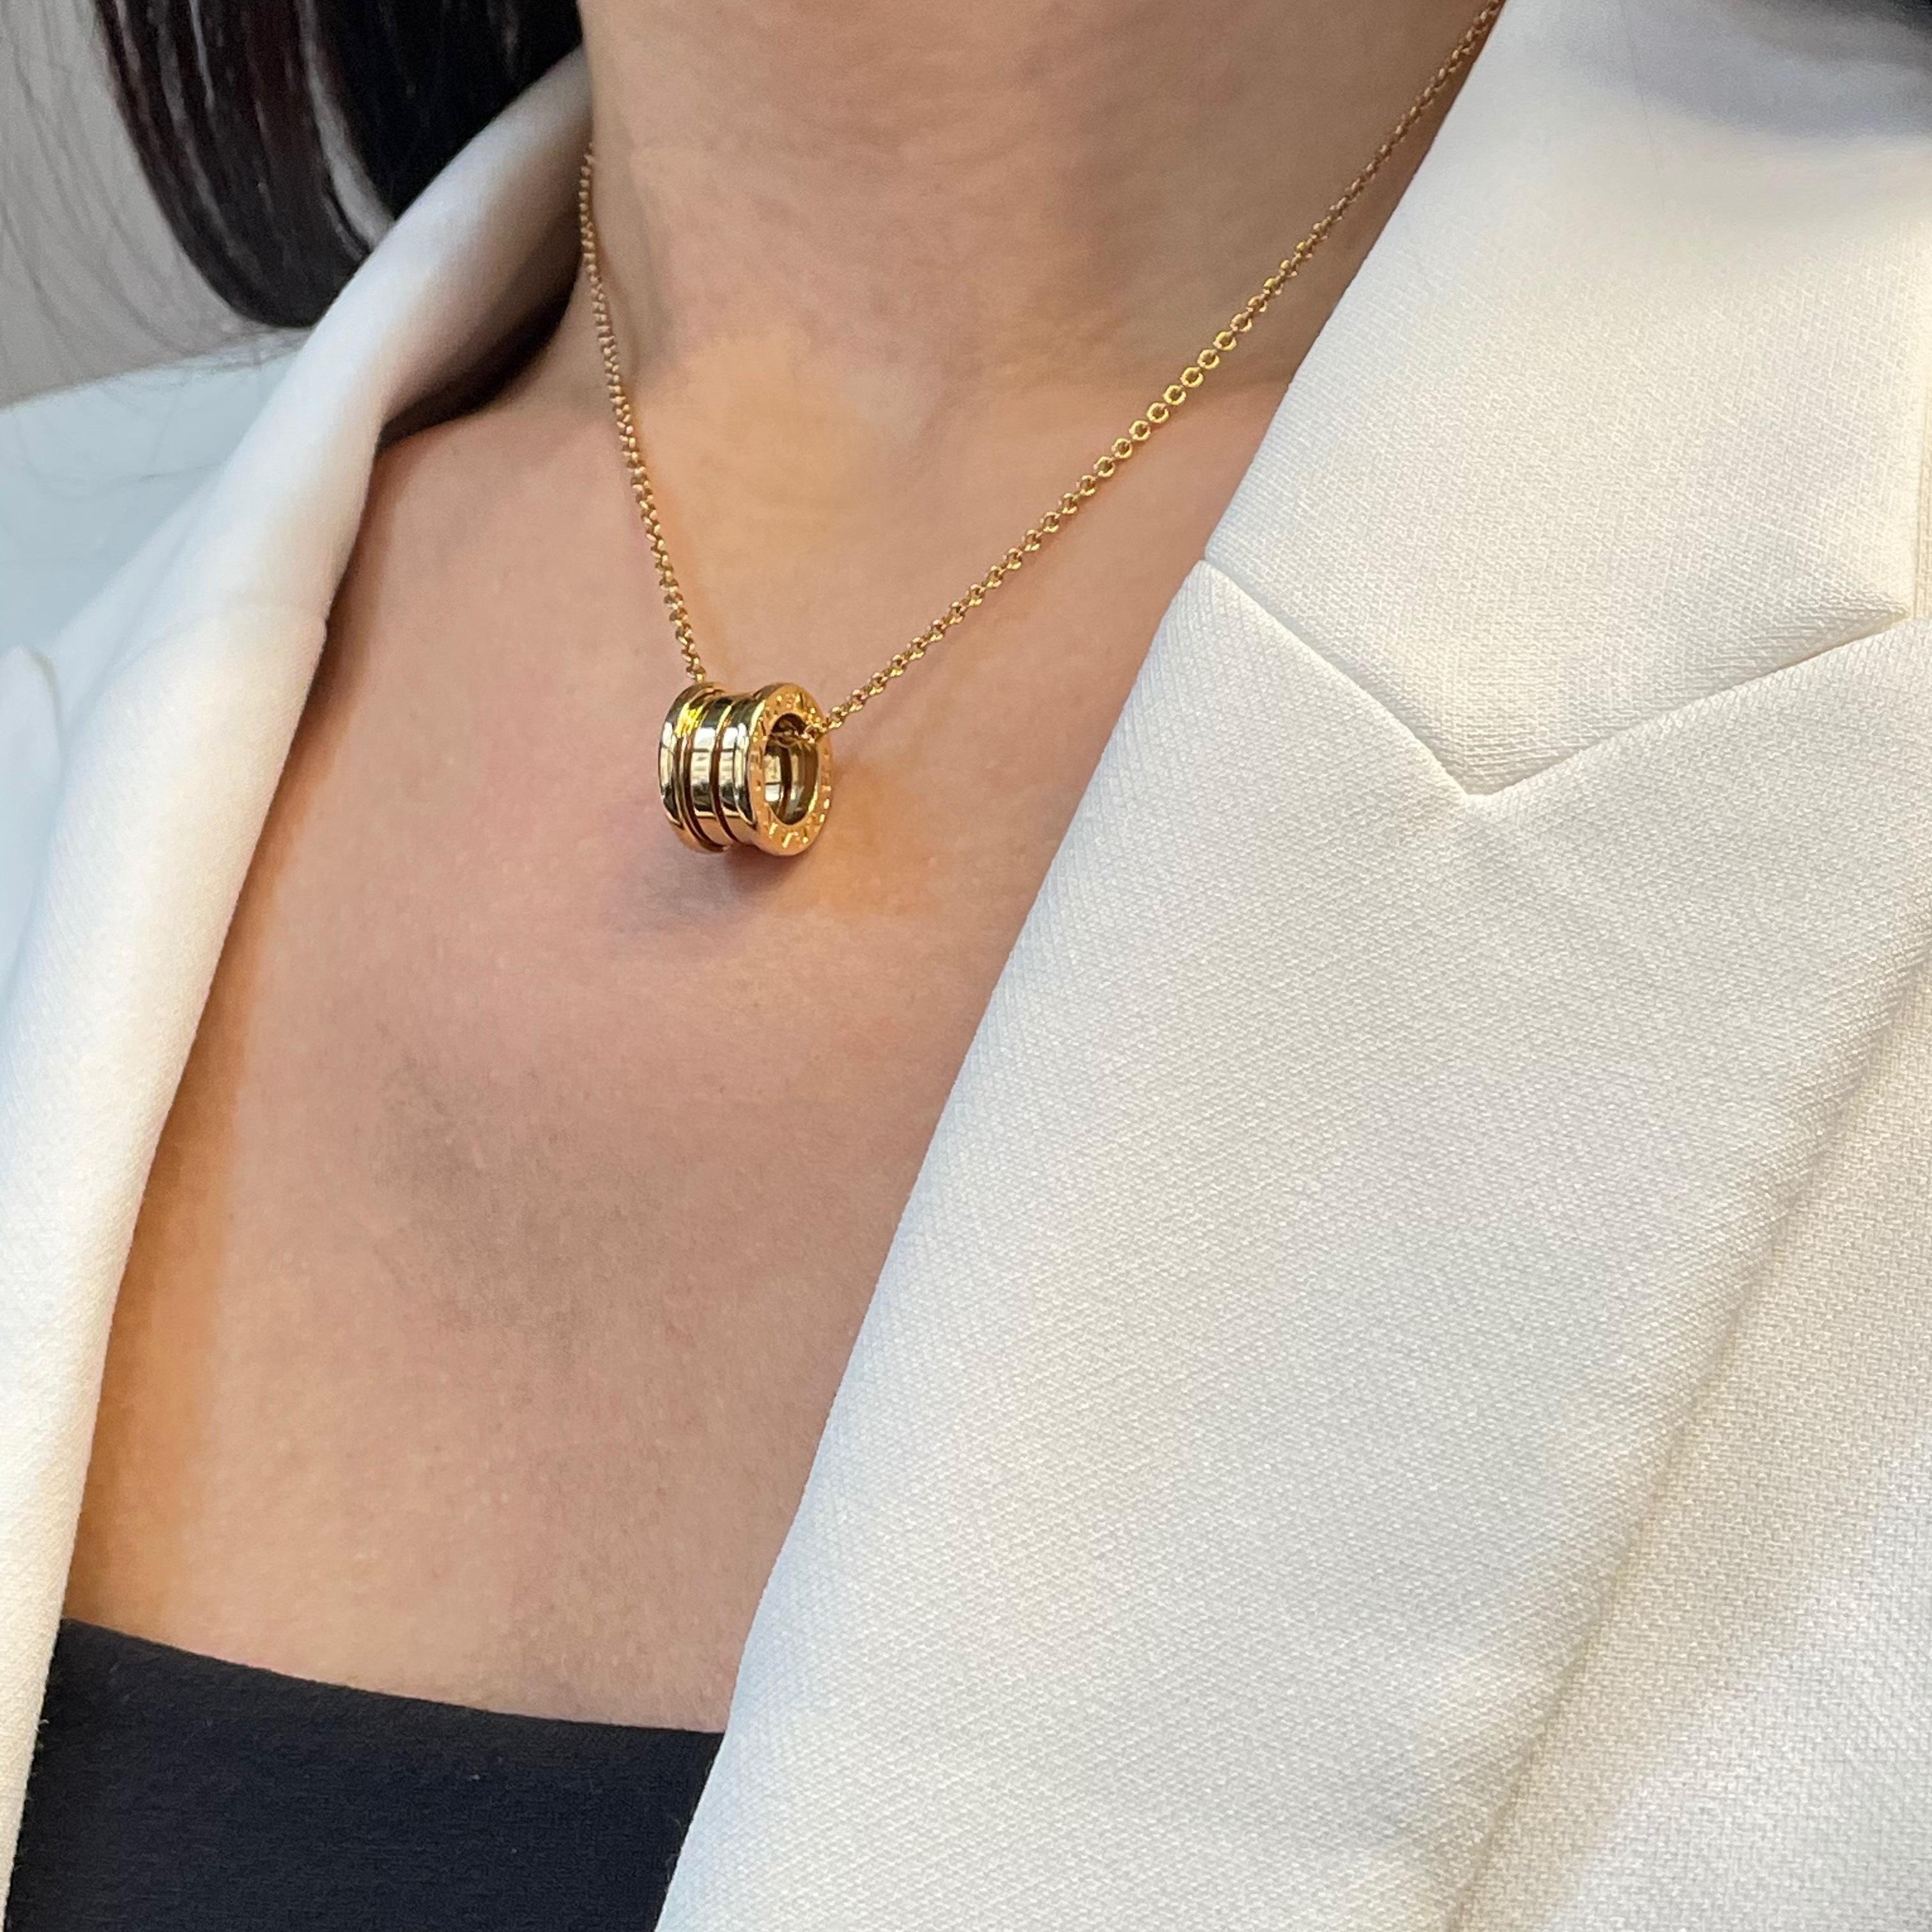 Modern Bvlgari B.Zero1 18k Yellow Gold Necklace with Small Round Pendant